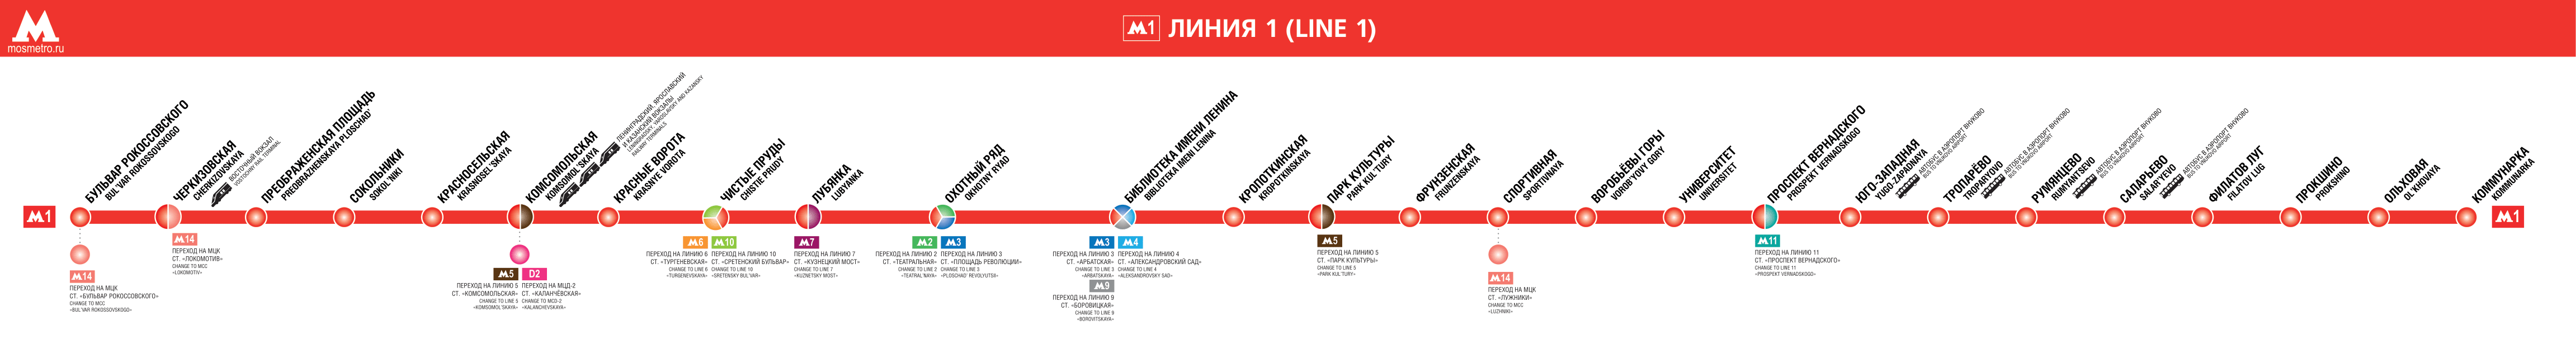 Moscou — Metro — Maps of Individual Lines; Moscou — Metro — [1] Sokolnicheskaya Line